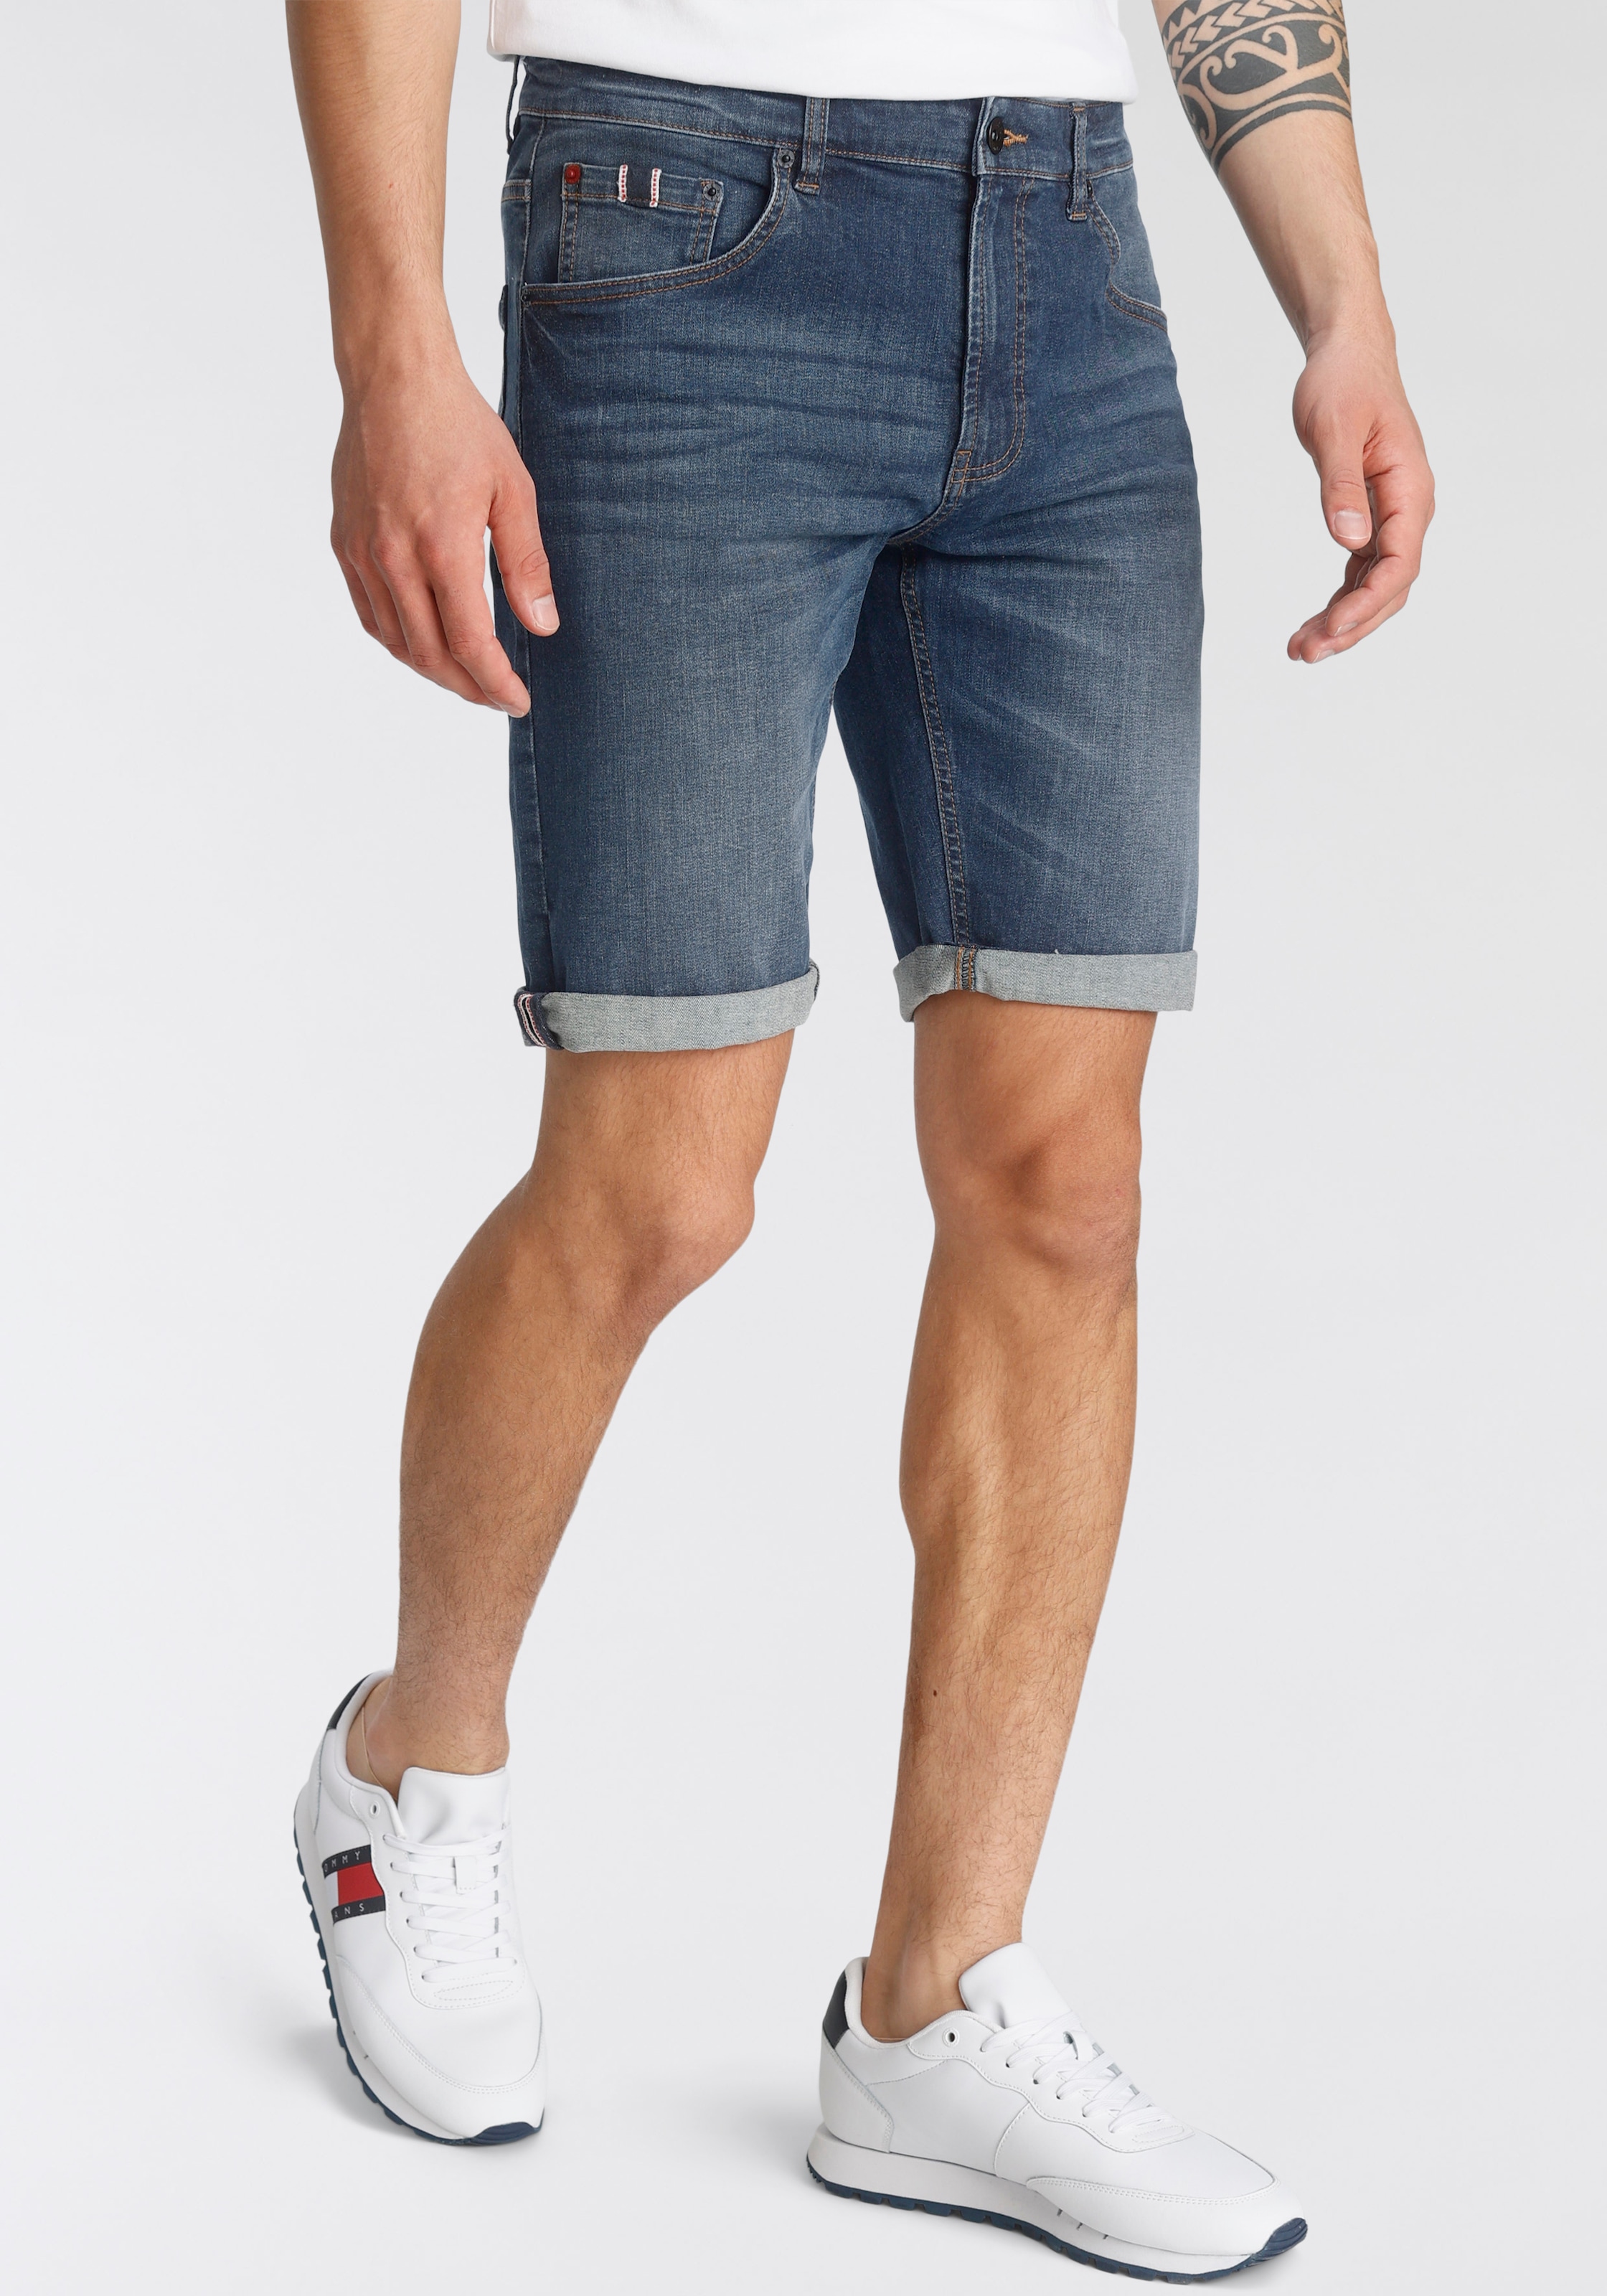 Shorts jetzt aktuelle online - Jeans Modetrends shoppen